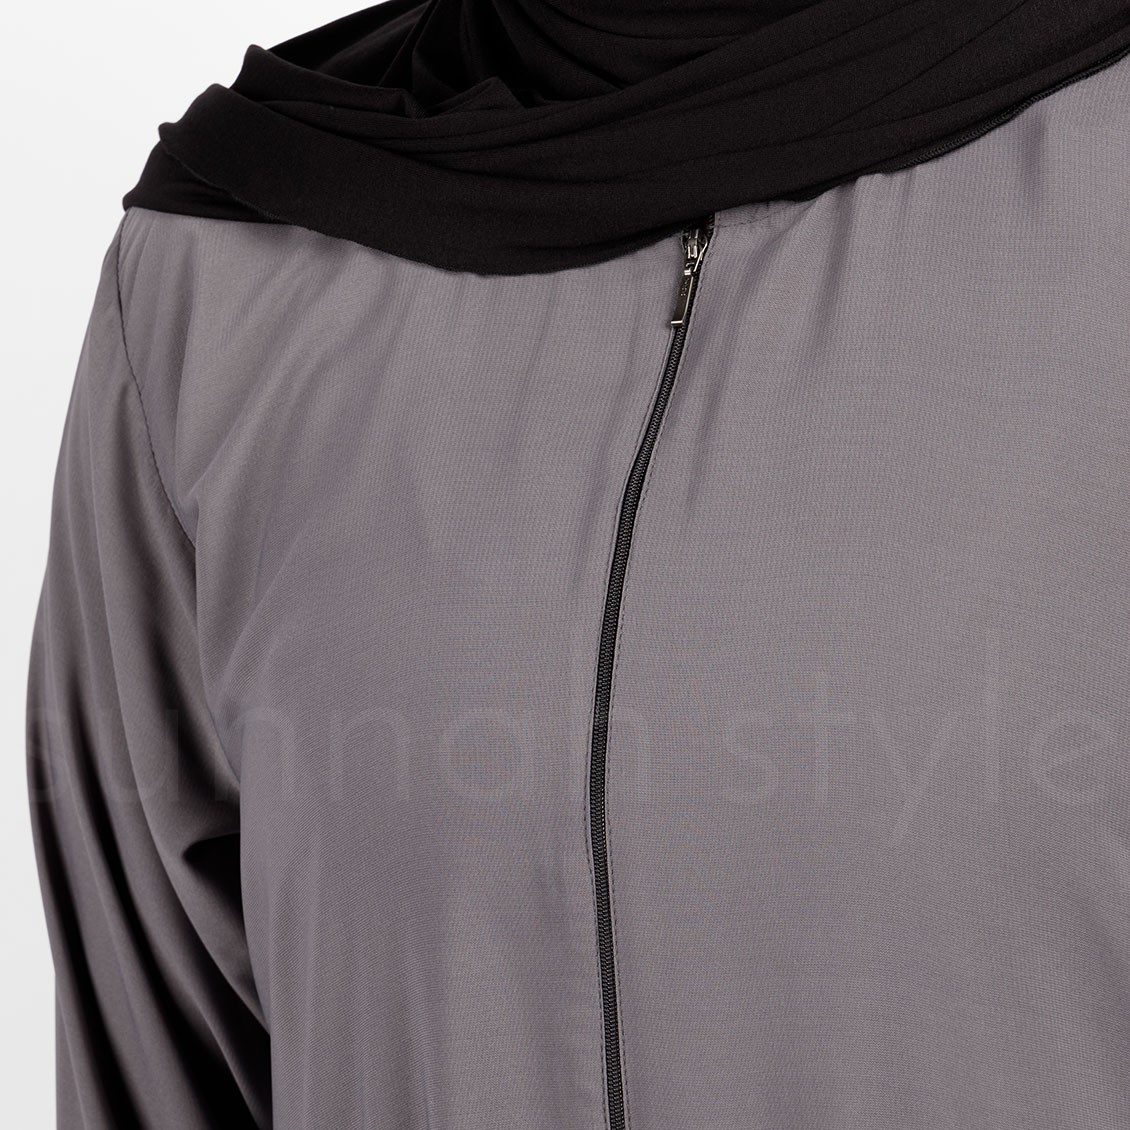 Sunnah Style Plain Closed Abaya Moon Grey